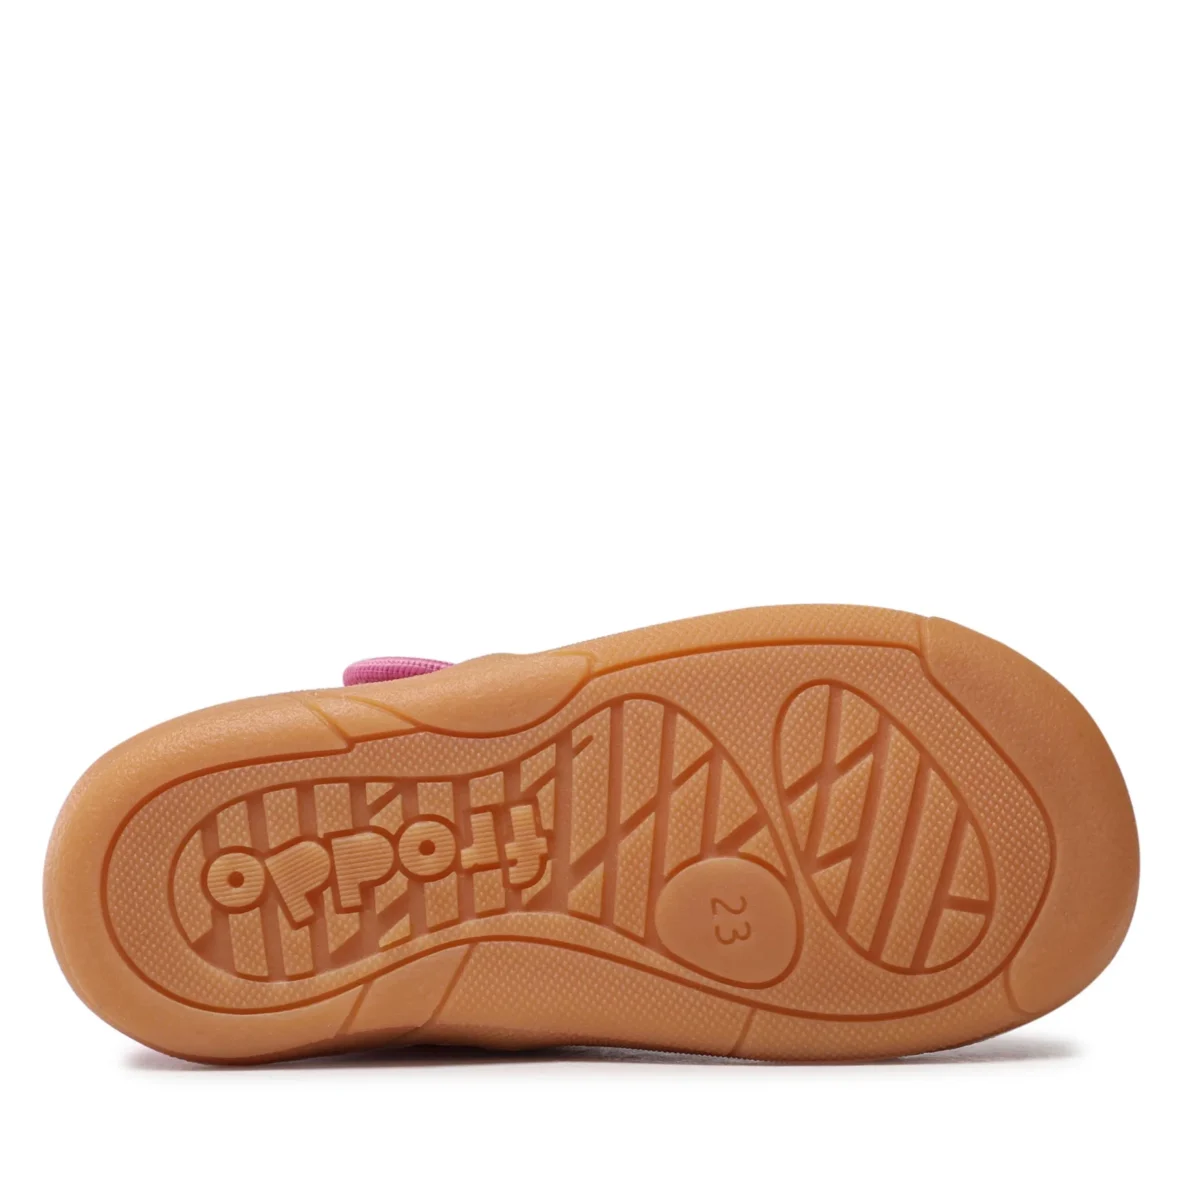 papuce-froddo-g1700305-2-s-pink